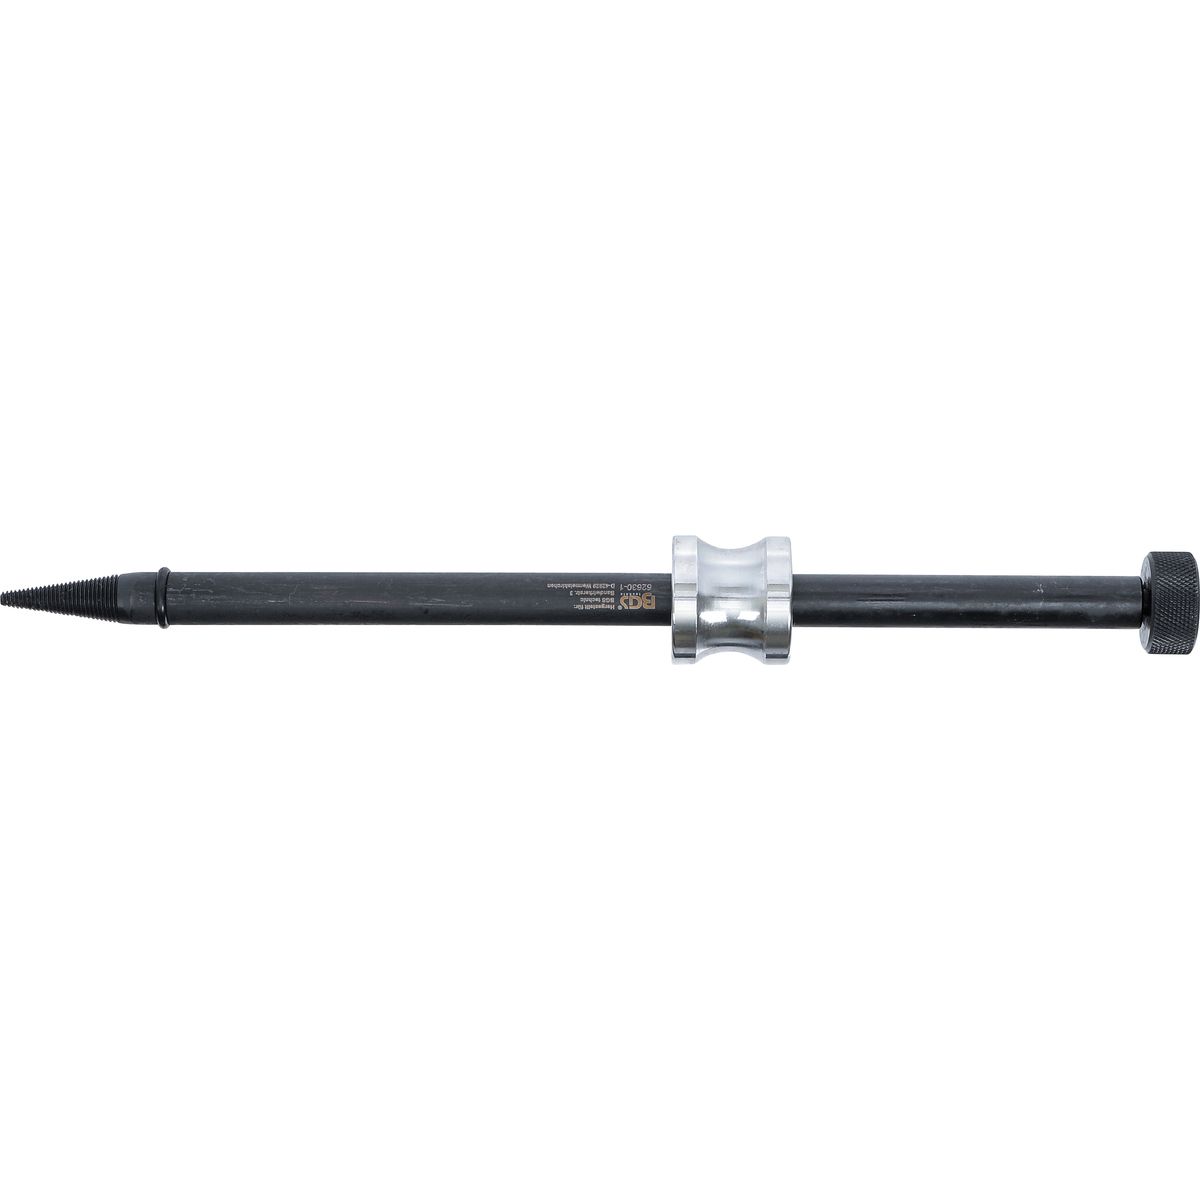 Injector Gasket Puller | 350 mm